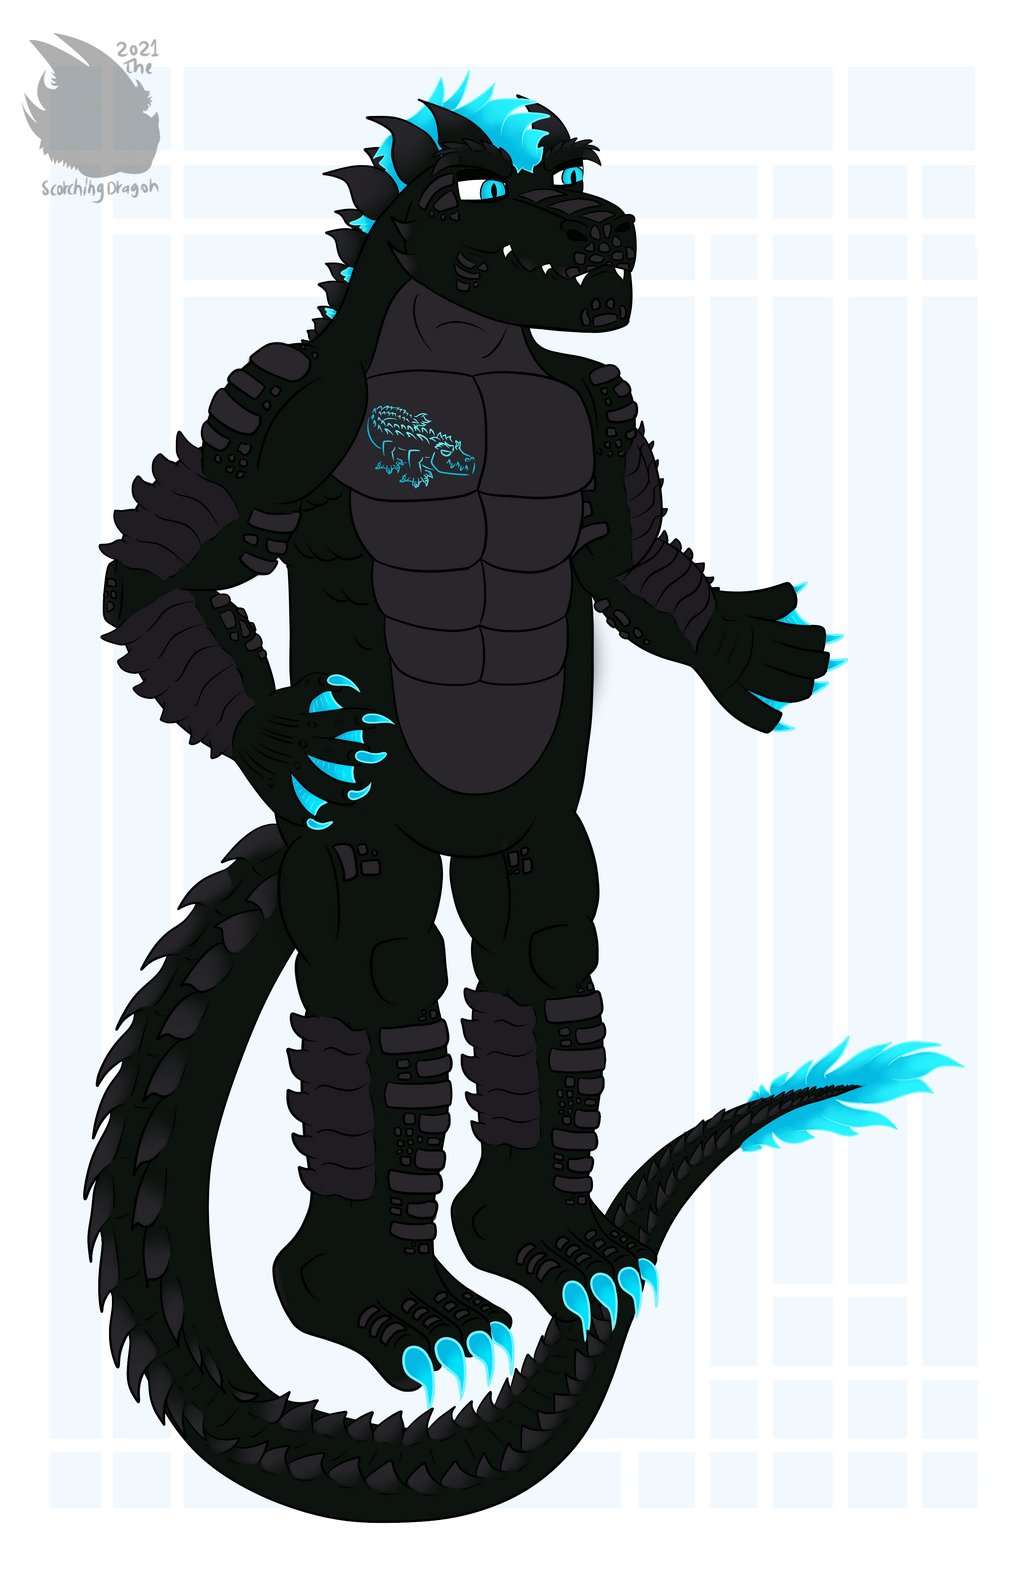 New Black crocodilian / croco-derg OC